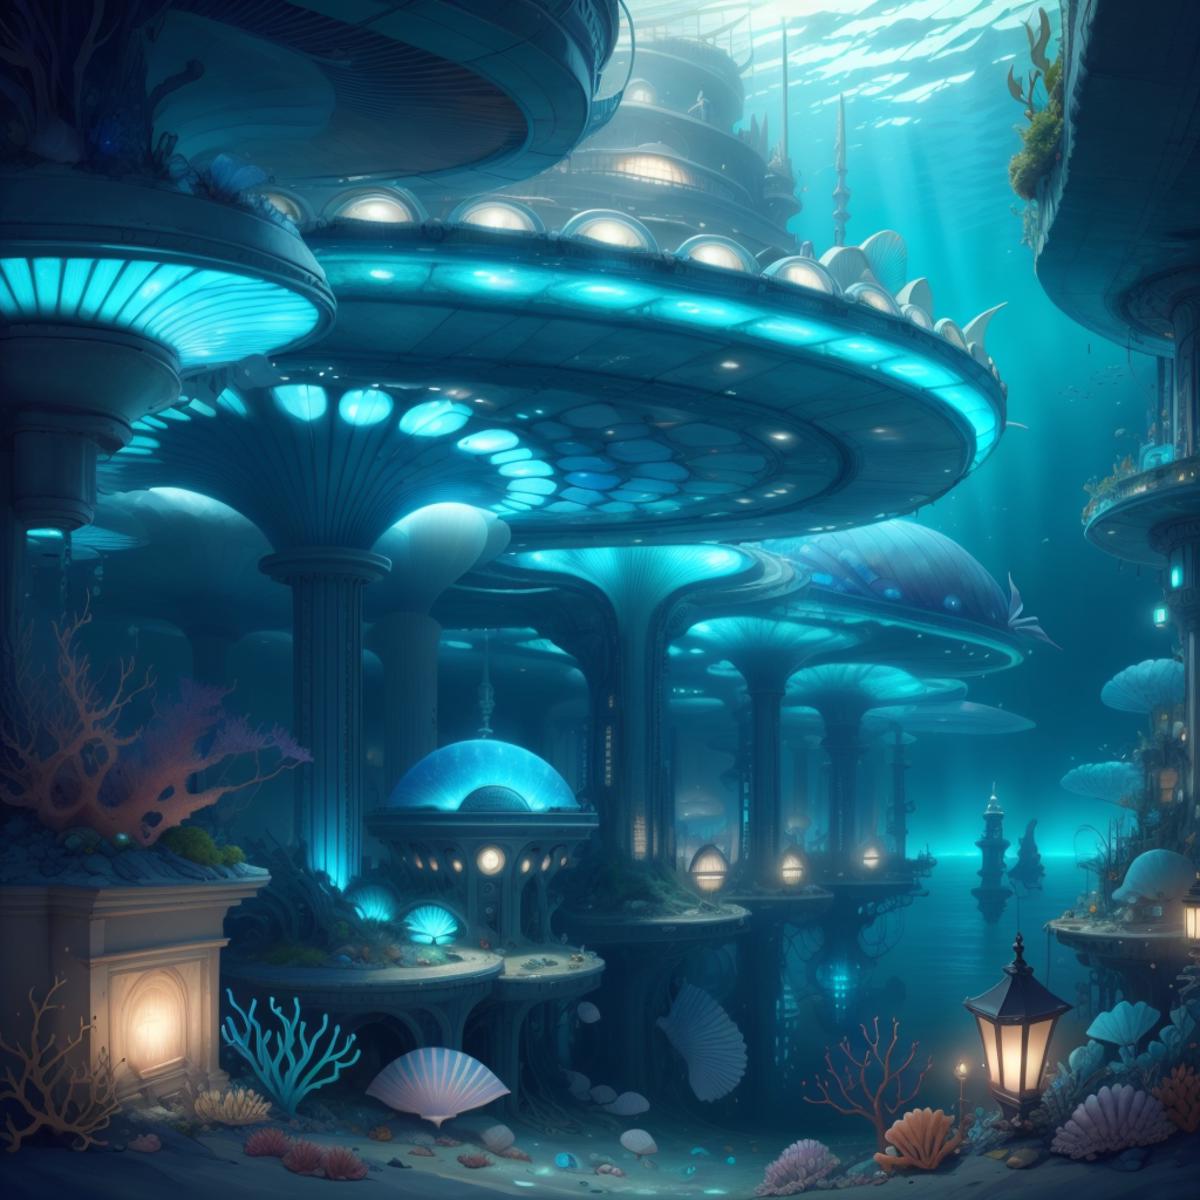 Atlantis tech - World Morph image by navimixu